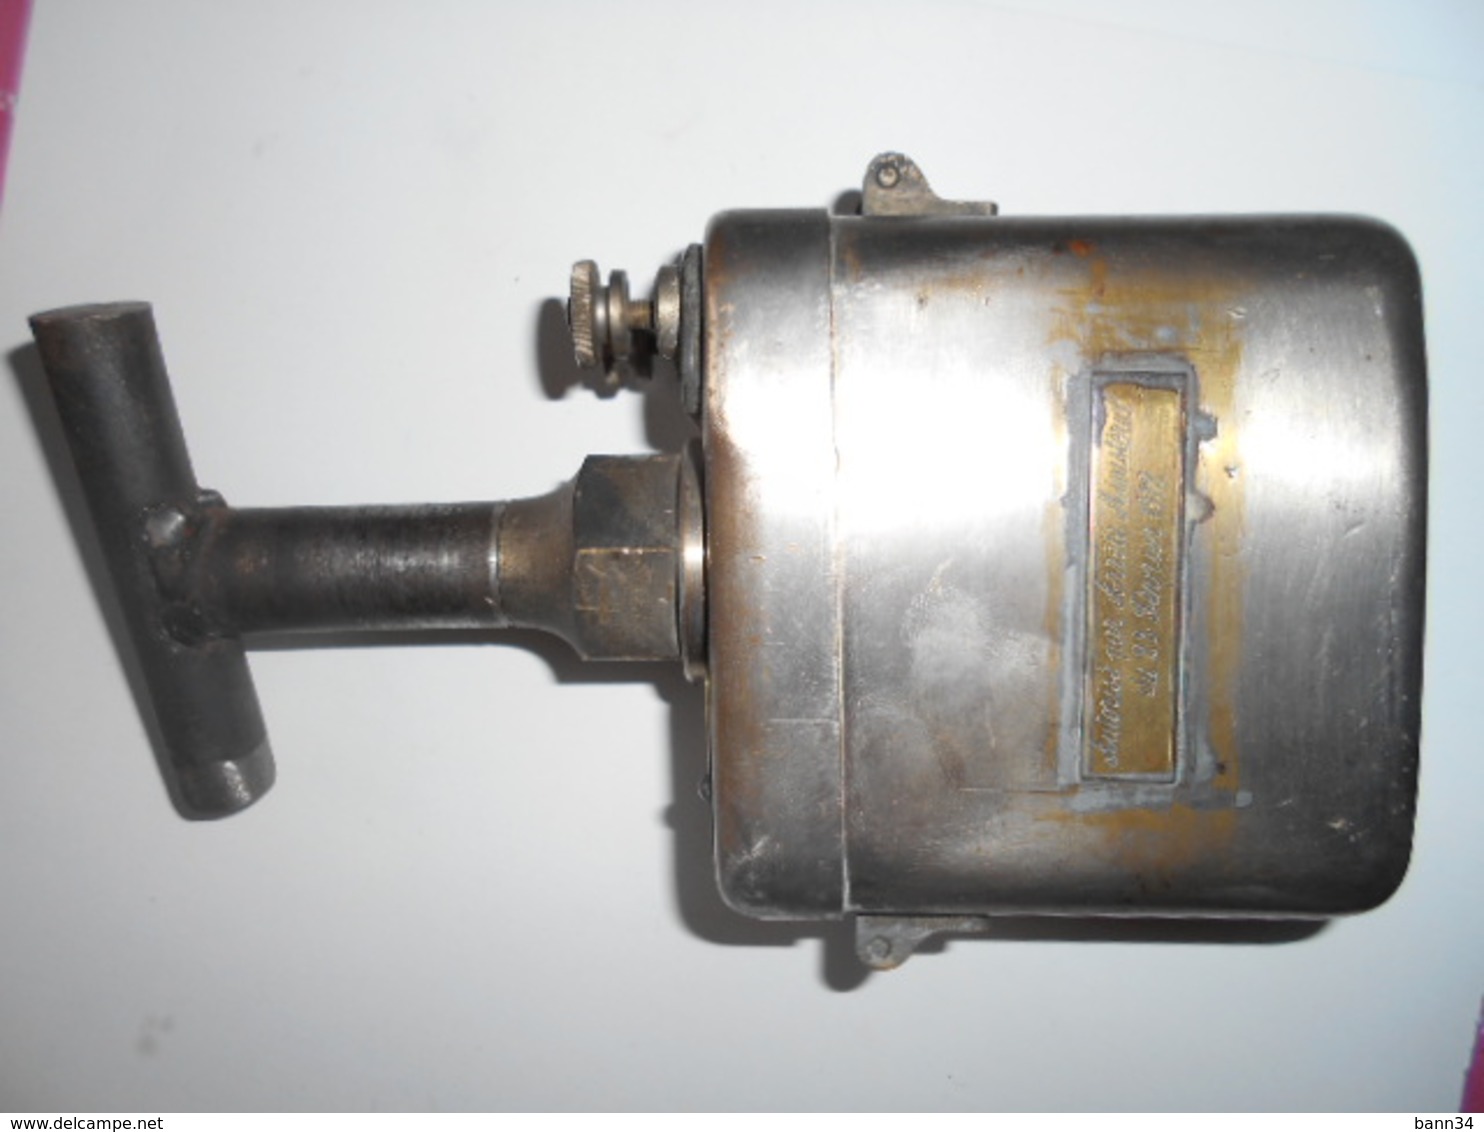 Materiel Obsolete De Sabotage Ffi Ftp Resistance / Exploseur A Dynamo / Genie / Poilu Ww1 - 1914-18